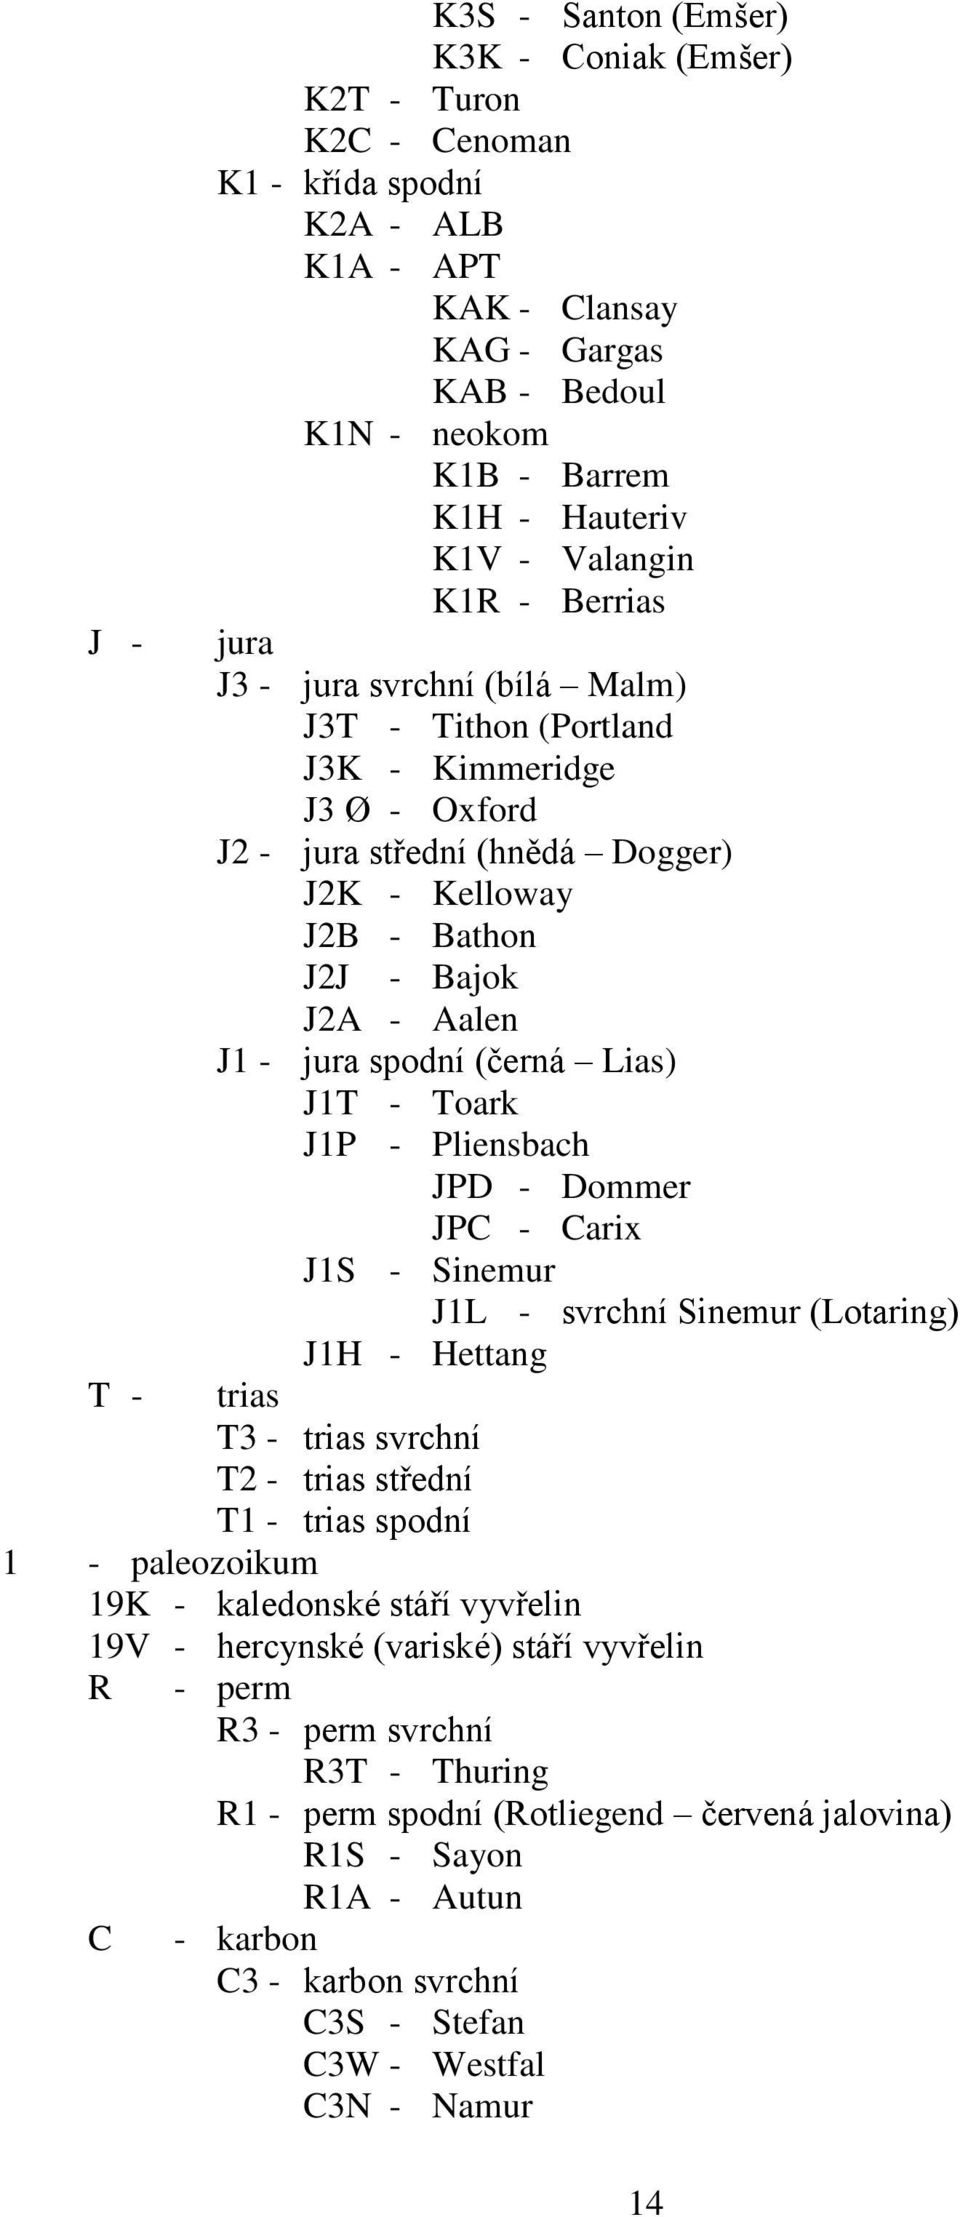 J1 - jura spodní (černá Lias) J1T - Toark J1P - Pliensbach JPD - Dommer JPC - Carix J1S - Sinemur J1L - svrchní Sinemur (Lotaring) J1H - Hettang trias T3 - trias svrchní T2 - trias střední T1 - trias